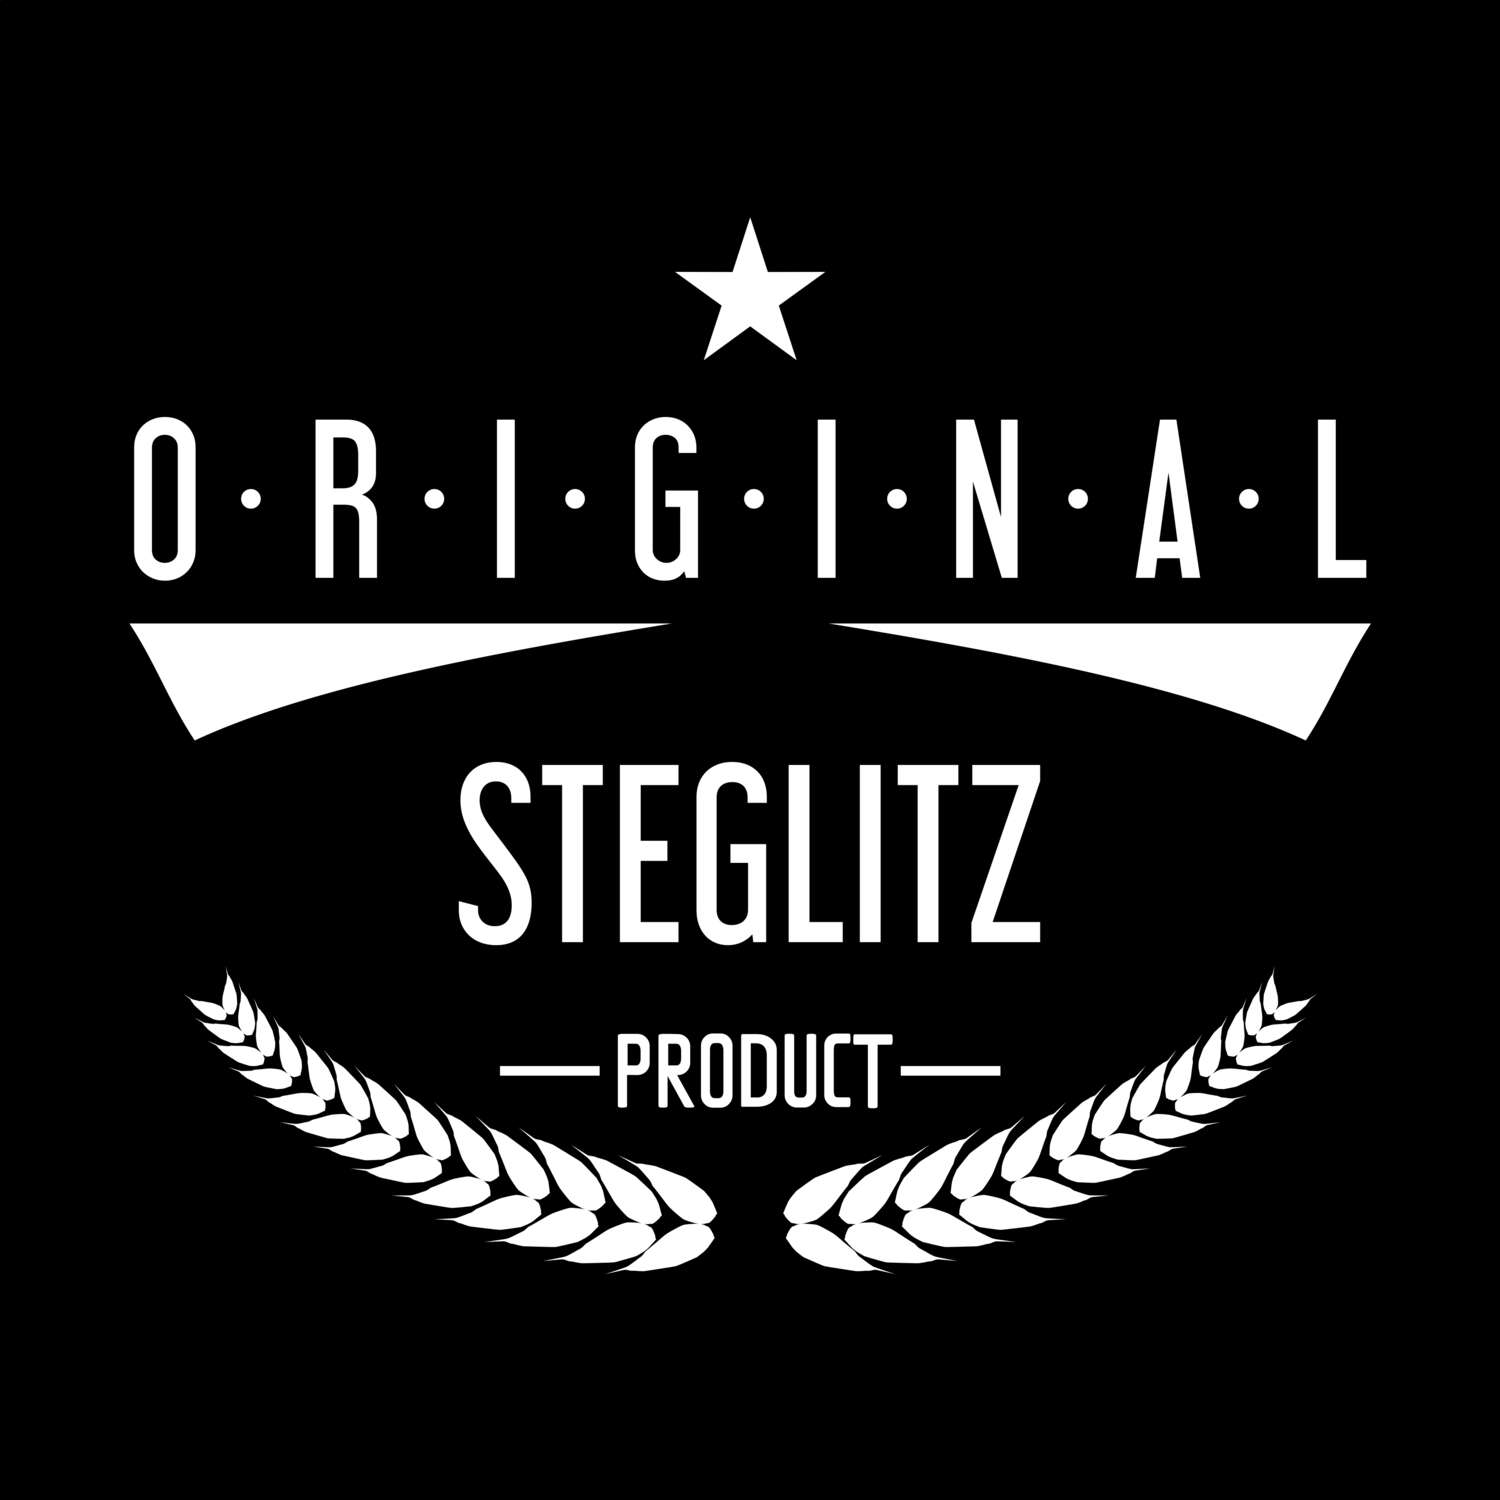 Steglitz T-Shirt »Original Product«